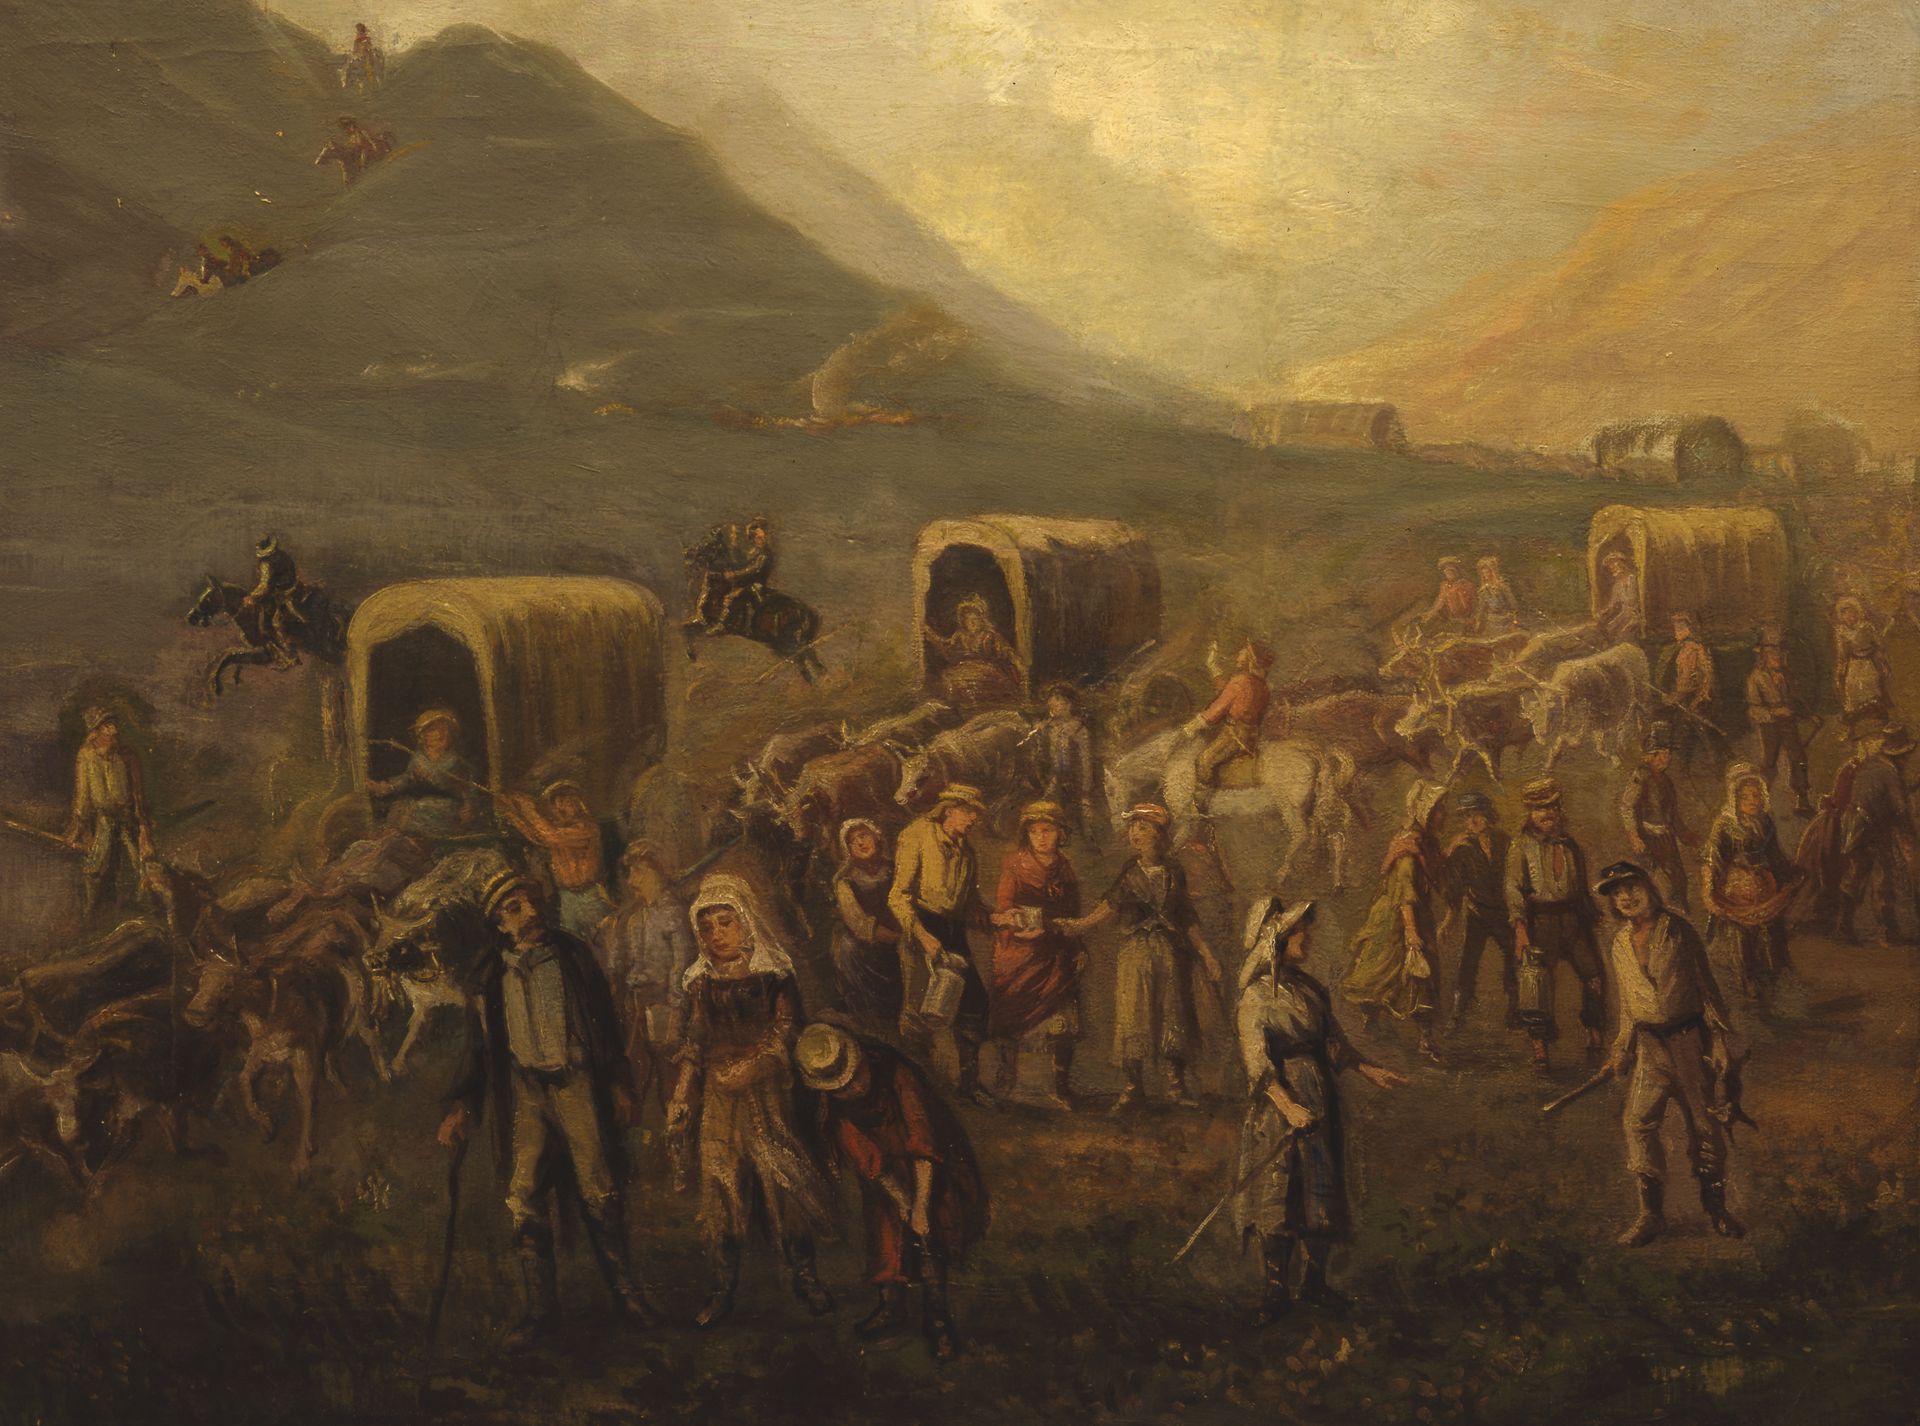 Mormon Emigrants Crossing the Plains in 1862, by Danquart Anthon Weggeland